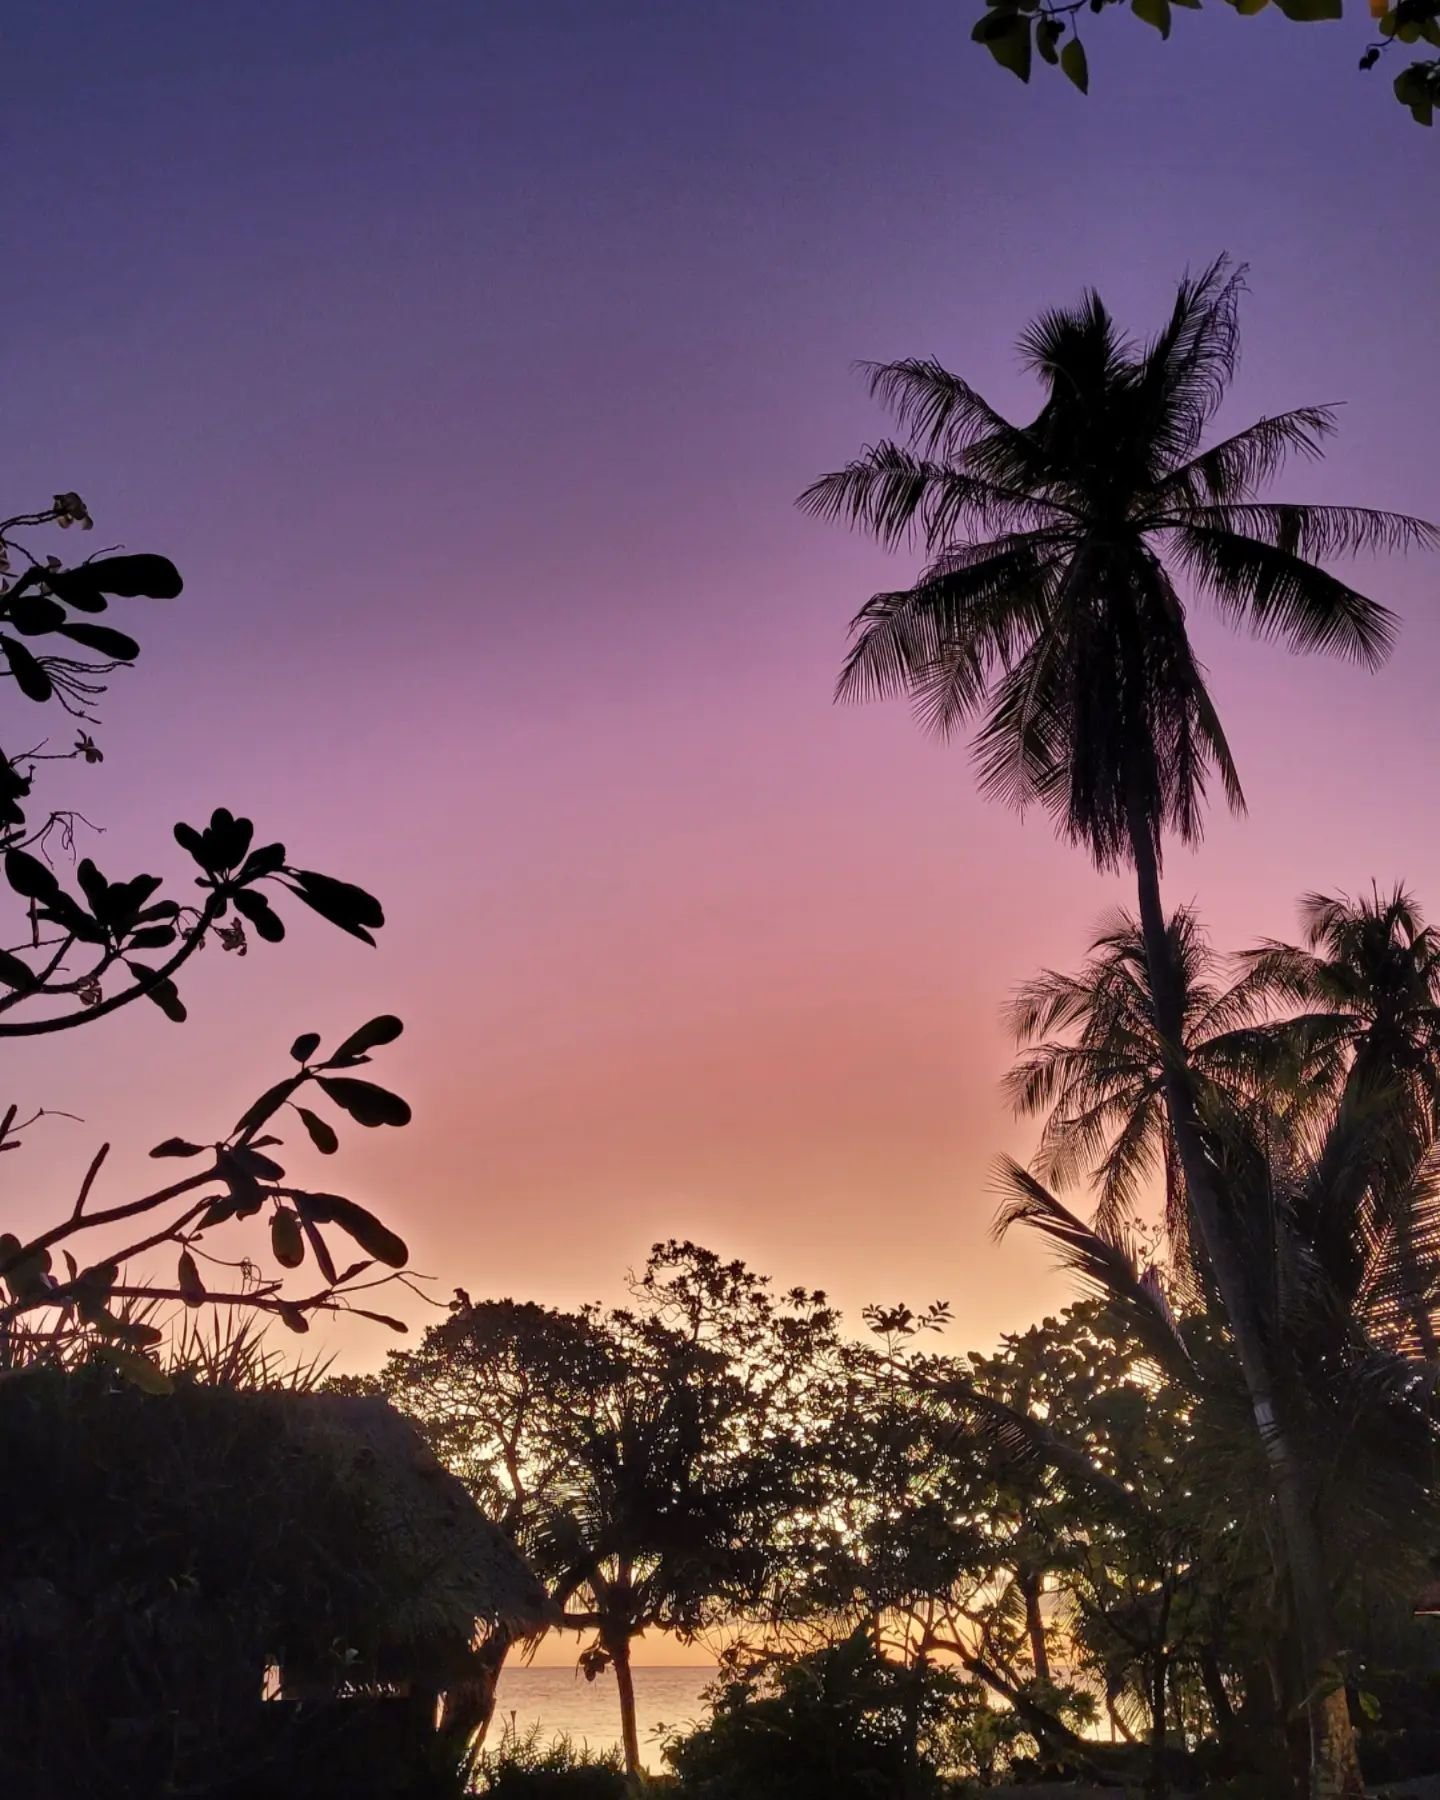 Sans filtre.... sunset de ouf !
#sunsets_captures
#amazing #wow #fakarava #tuamotu #frenchpolynesianislands